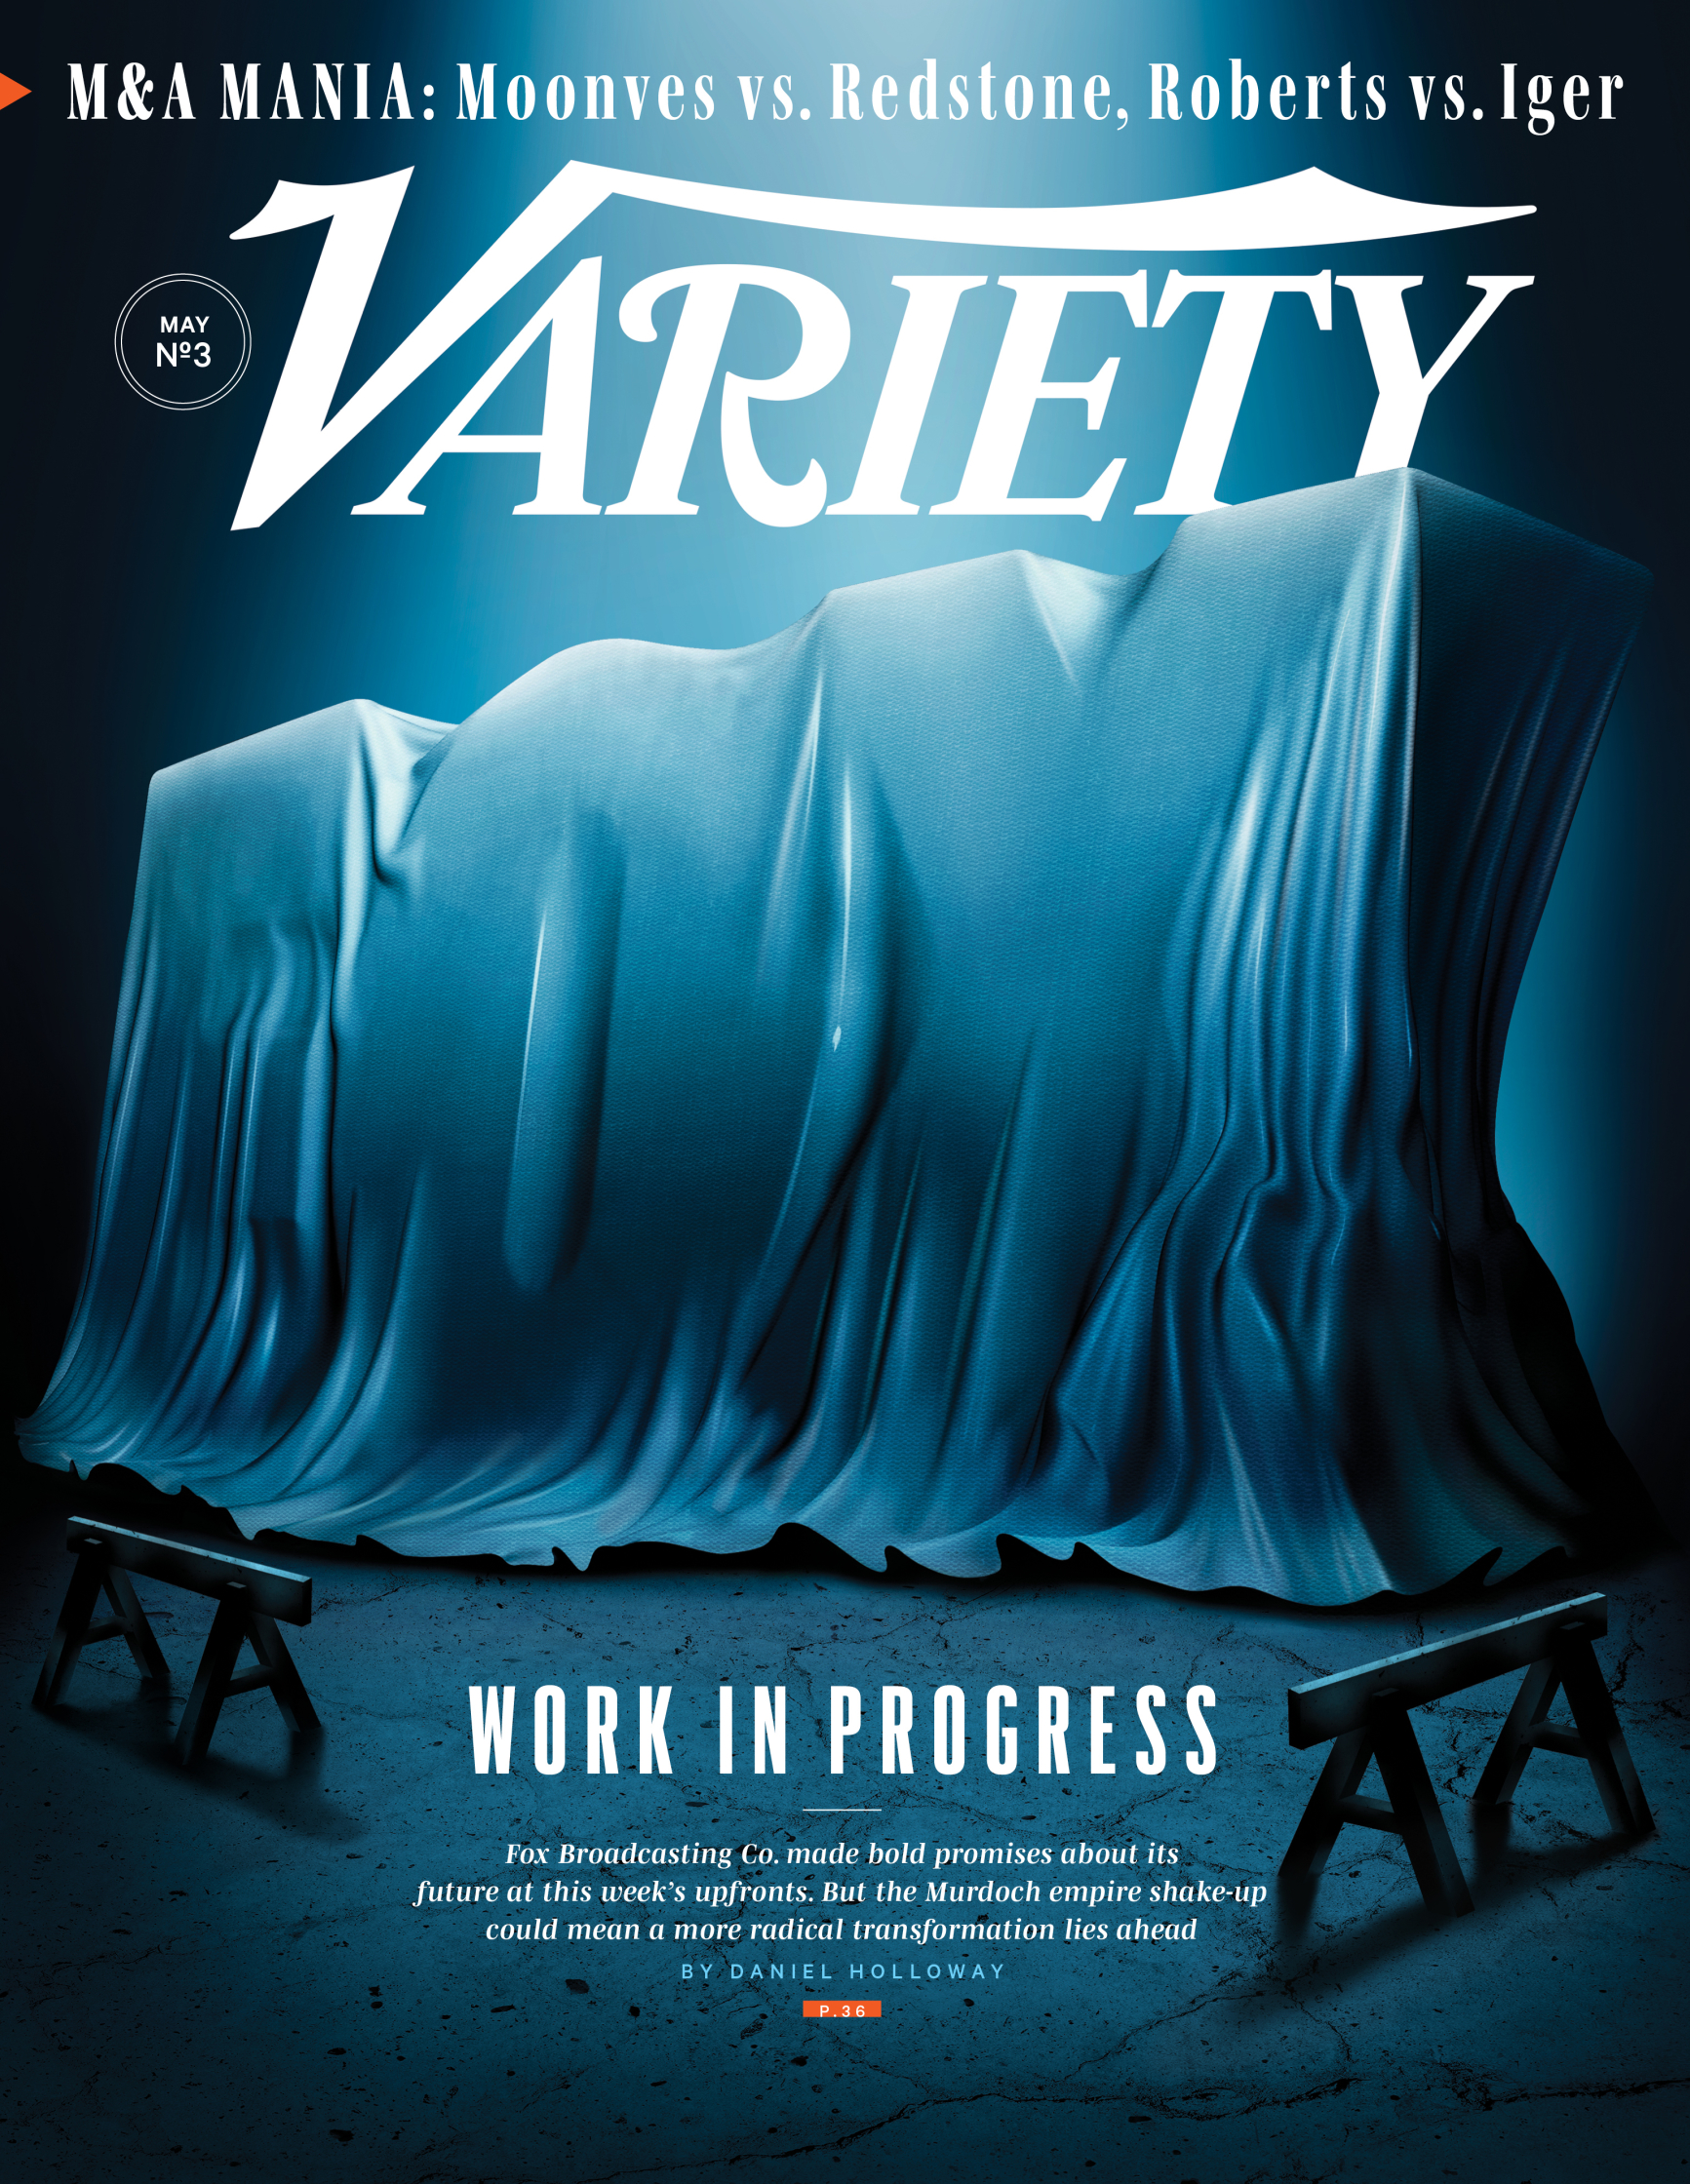 Variety_cover.jpg